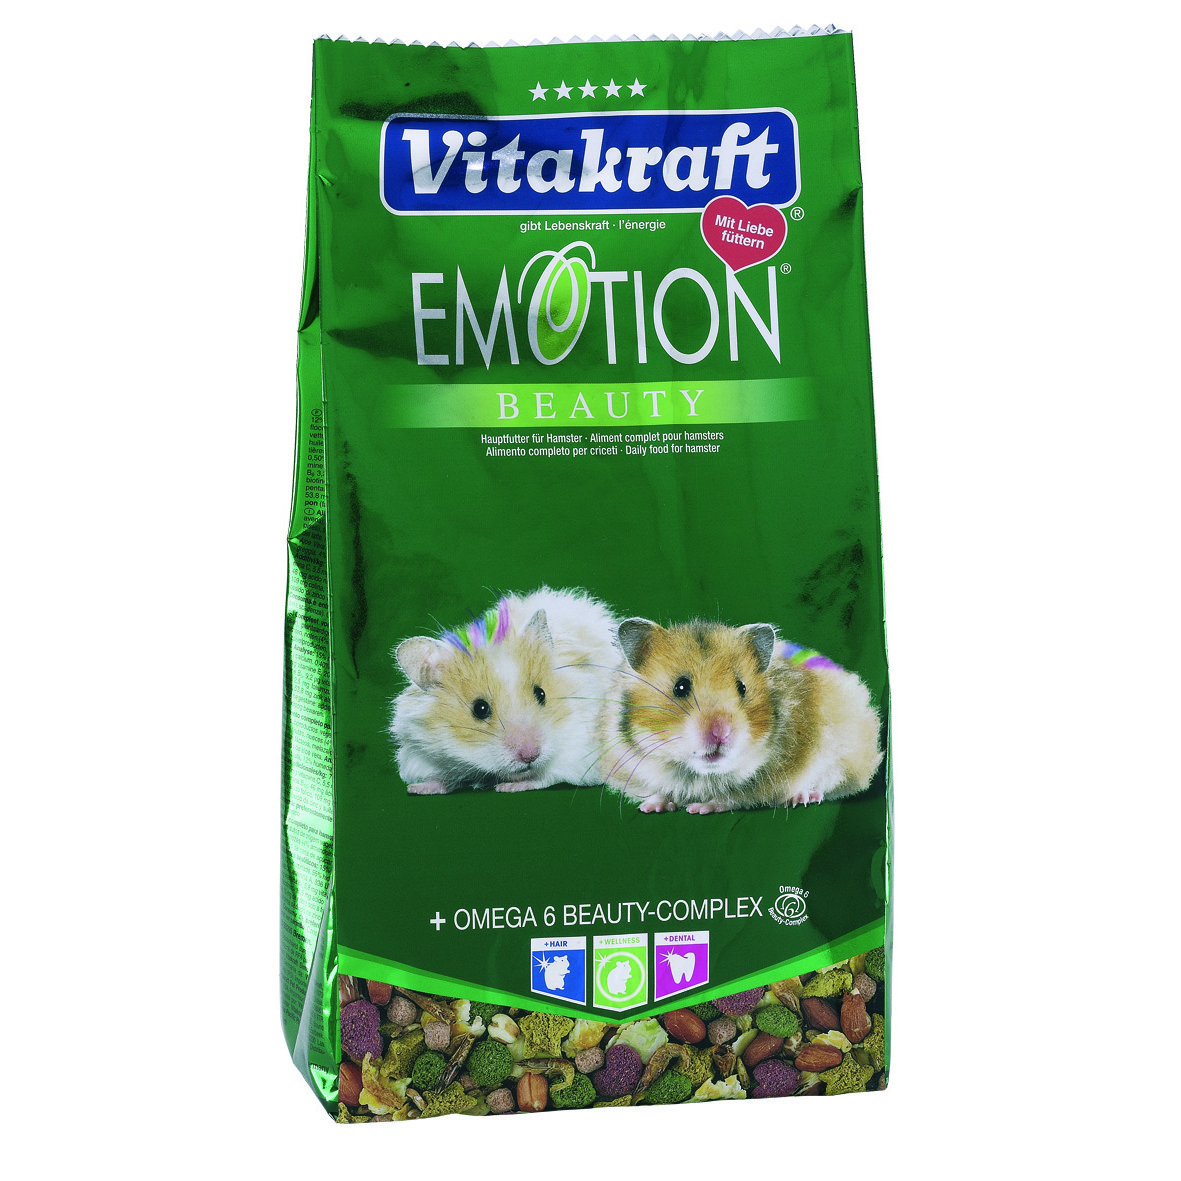 Emotion Beauty Hamster 3x600g